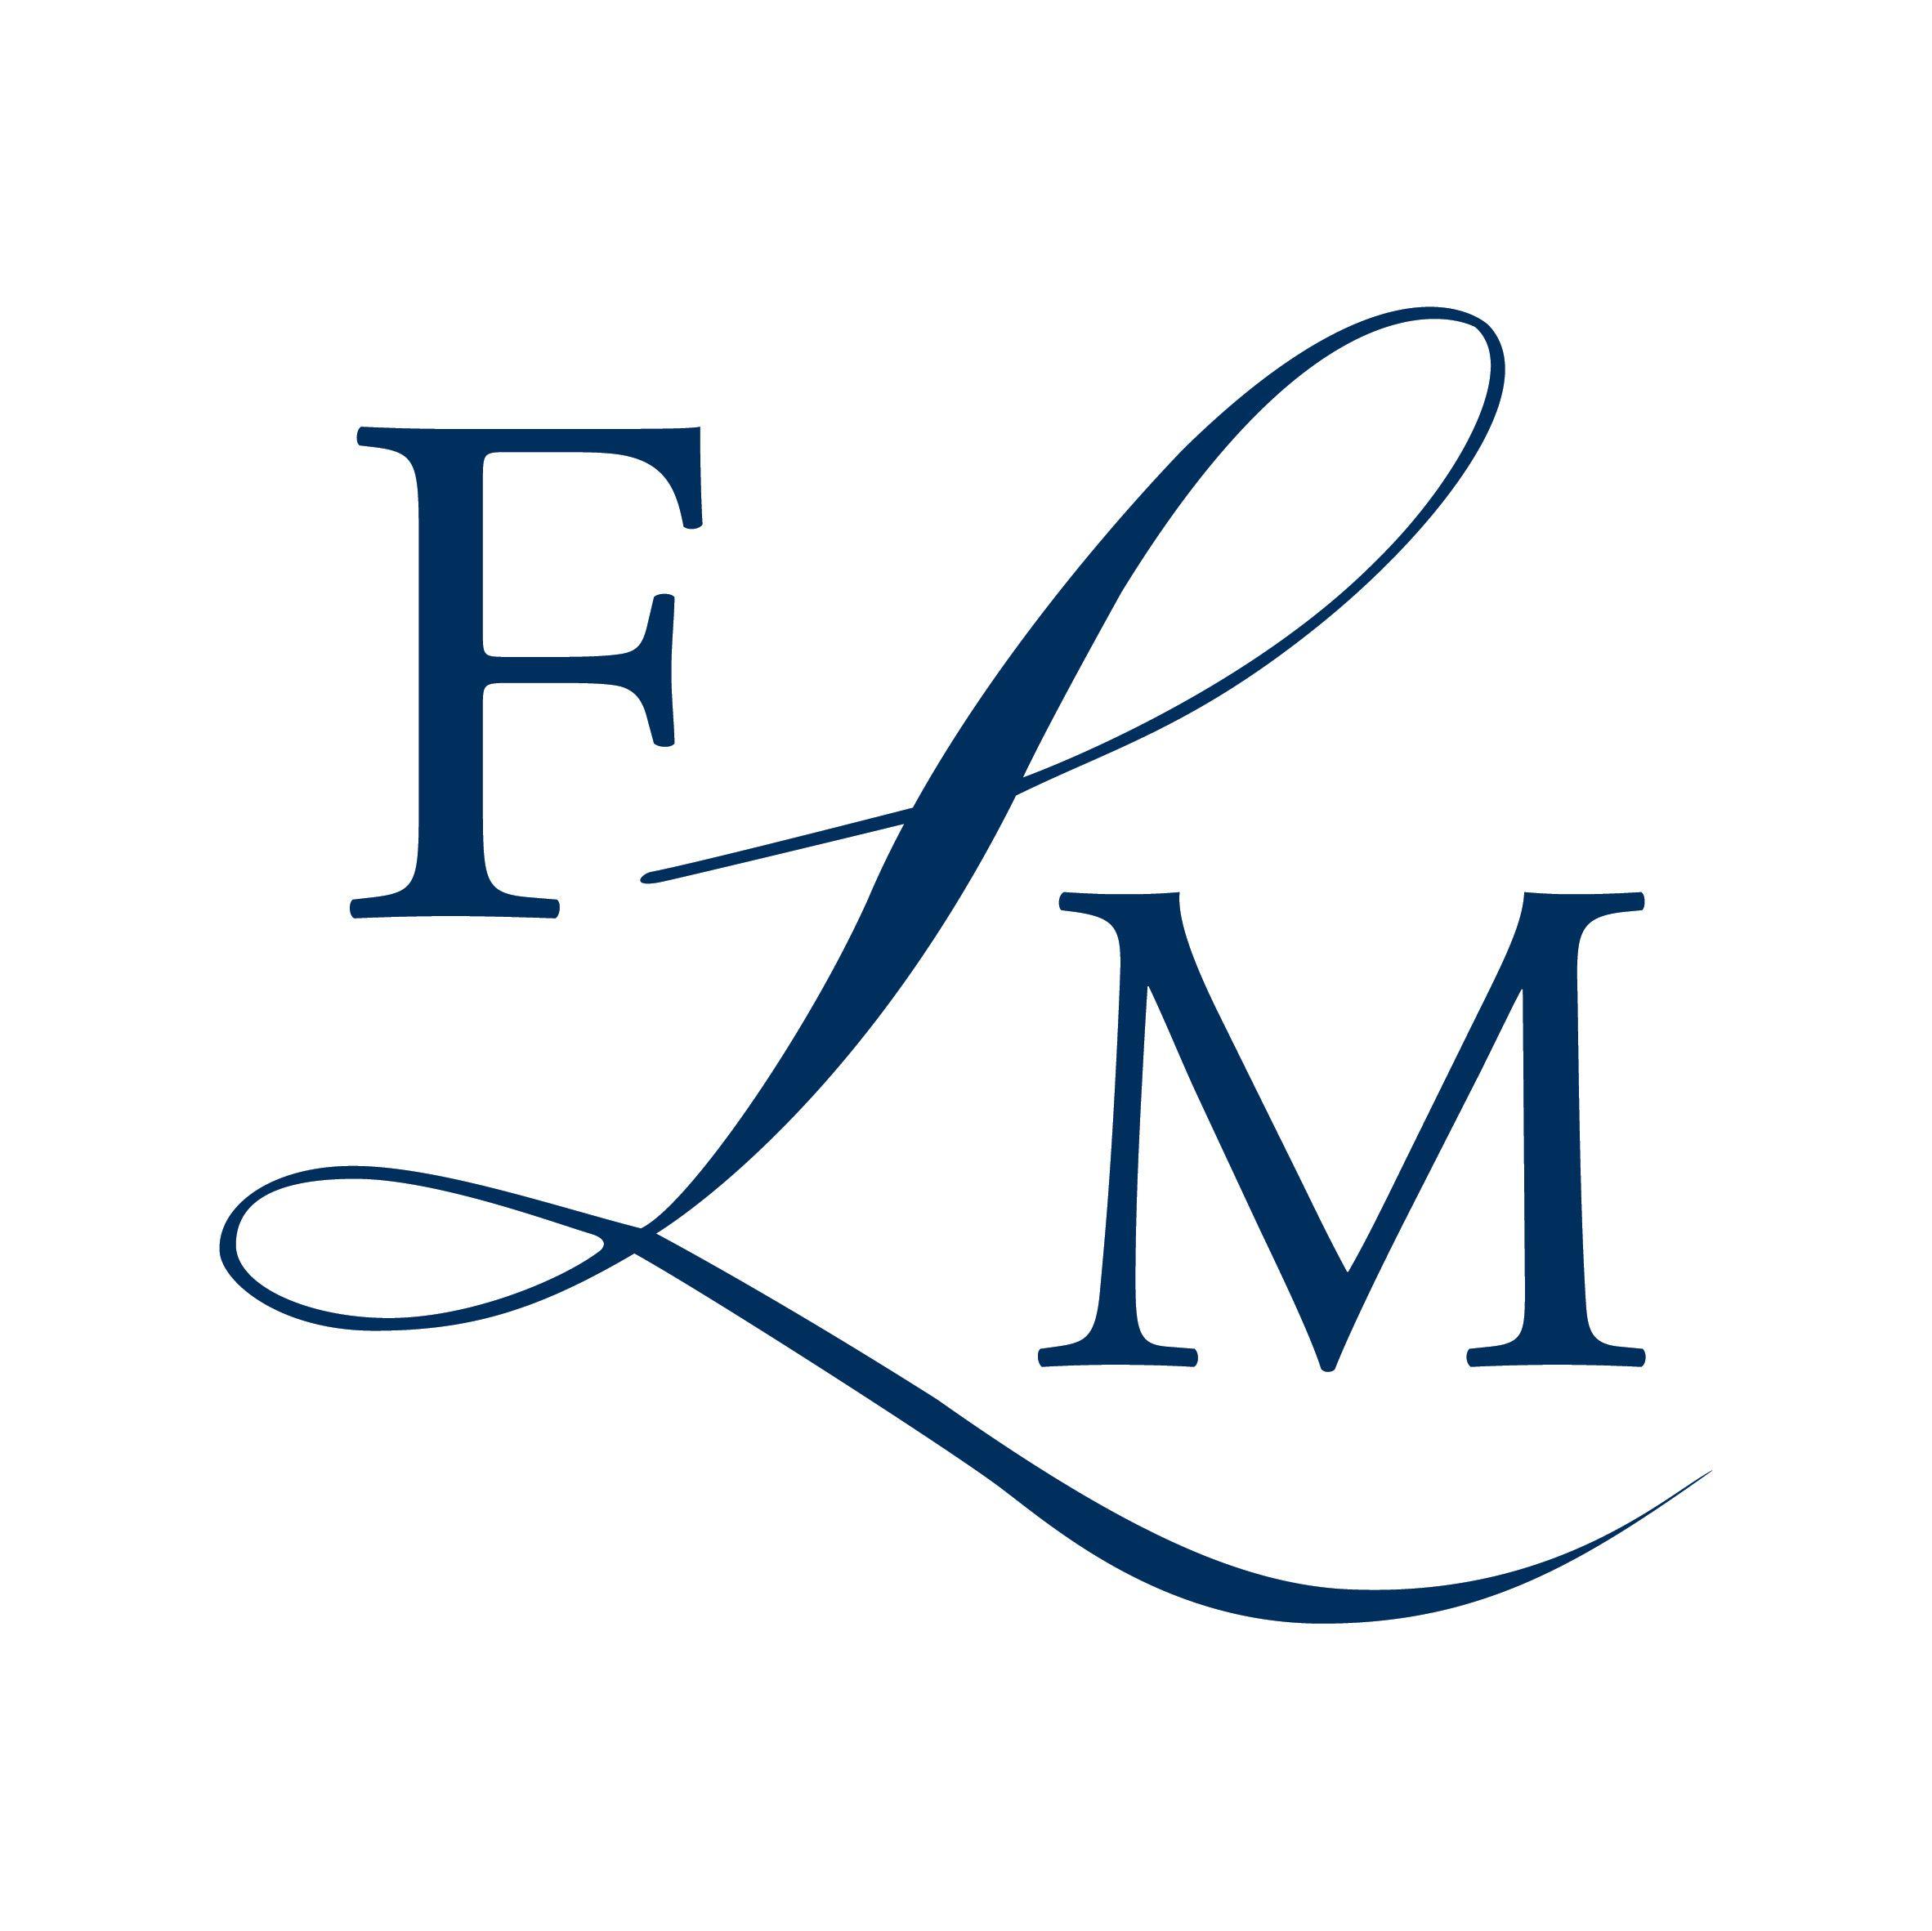 FLM Logo - Financial Advice. London. Financial Lifestyle Management